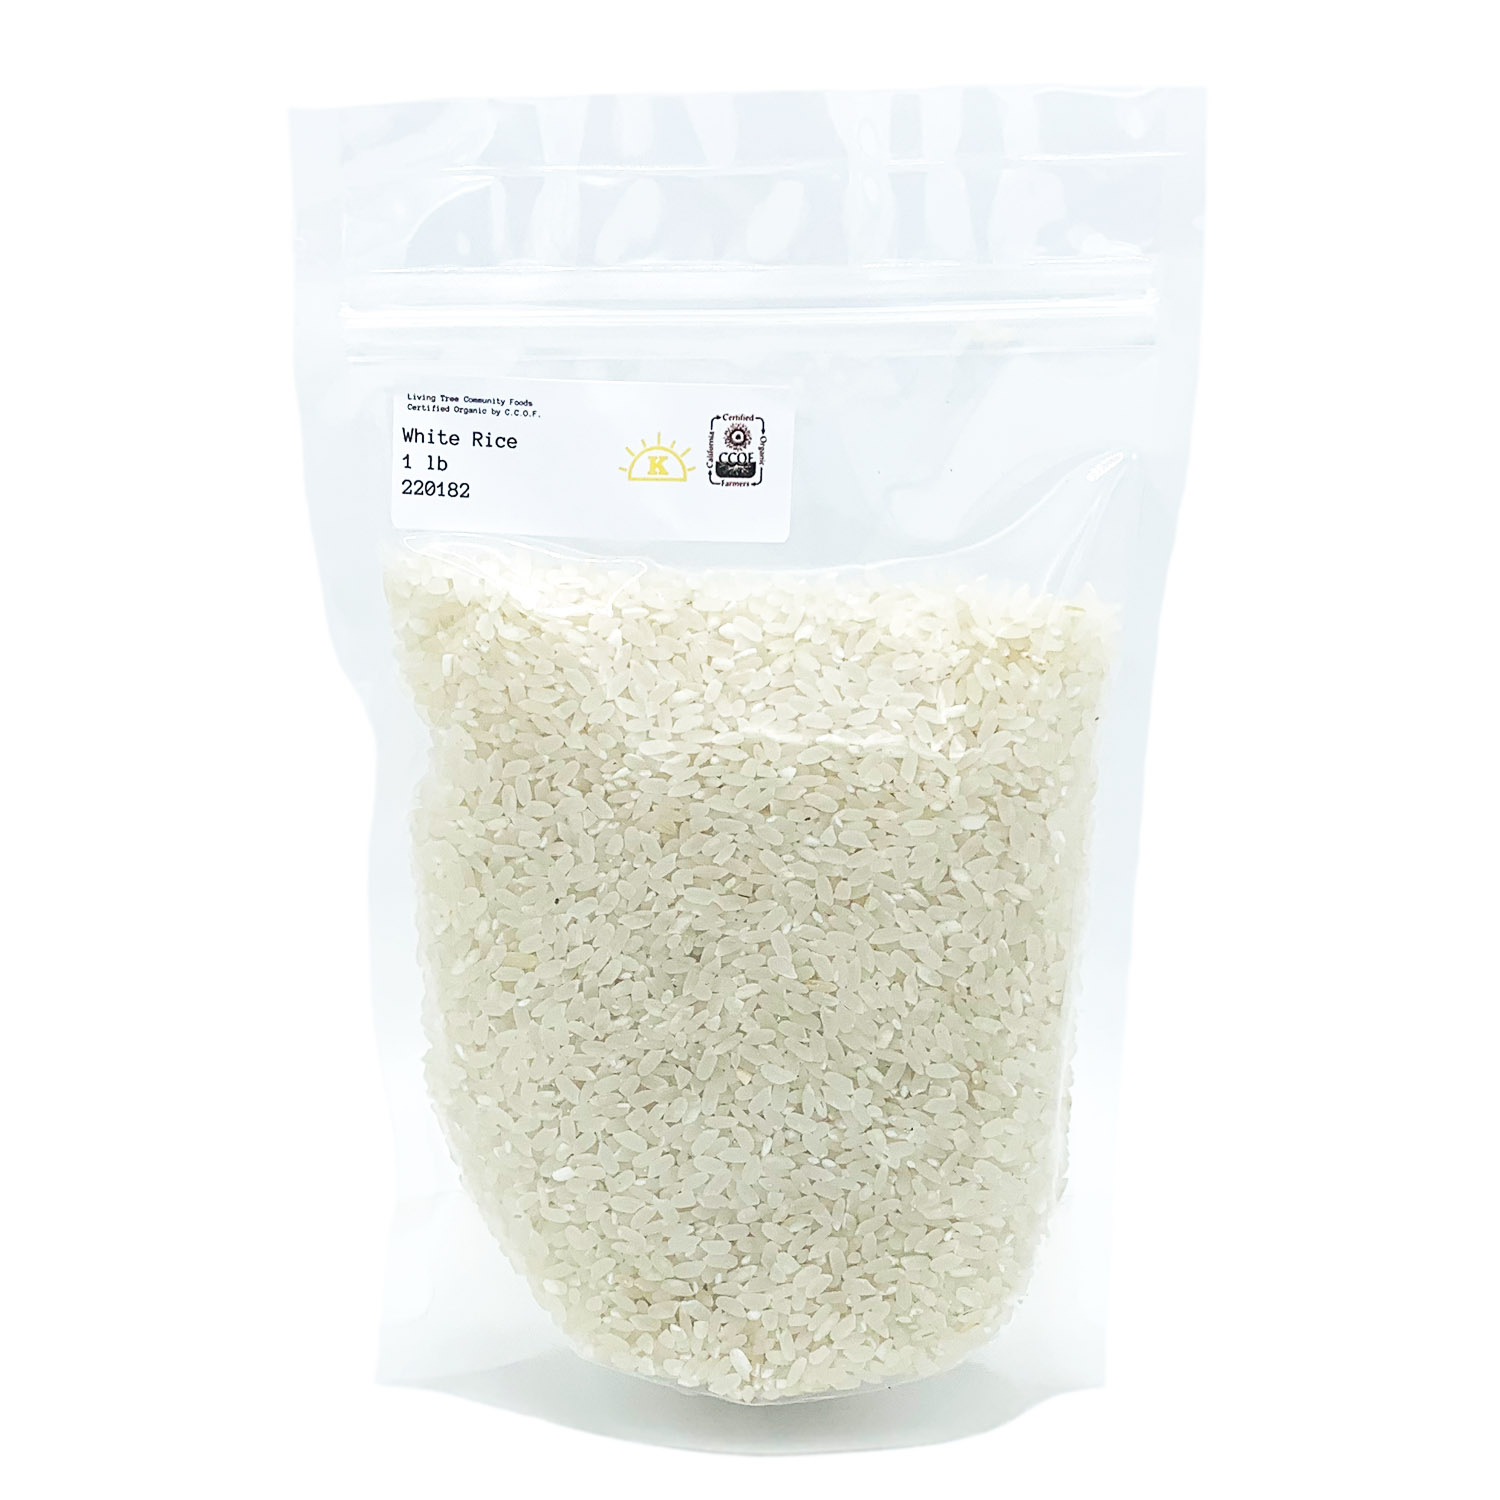 Shalabam Rice Bag design | Brand packaging, Rice bags, Packaging design